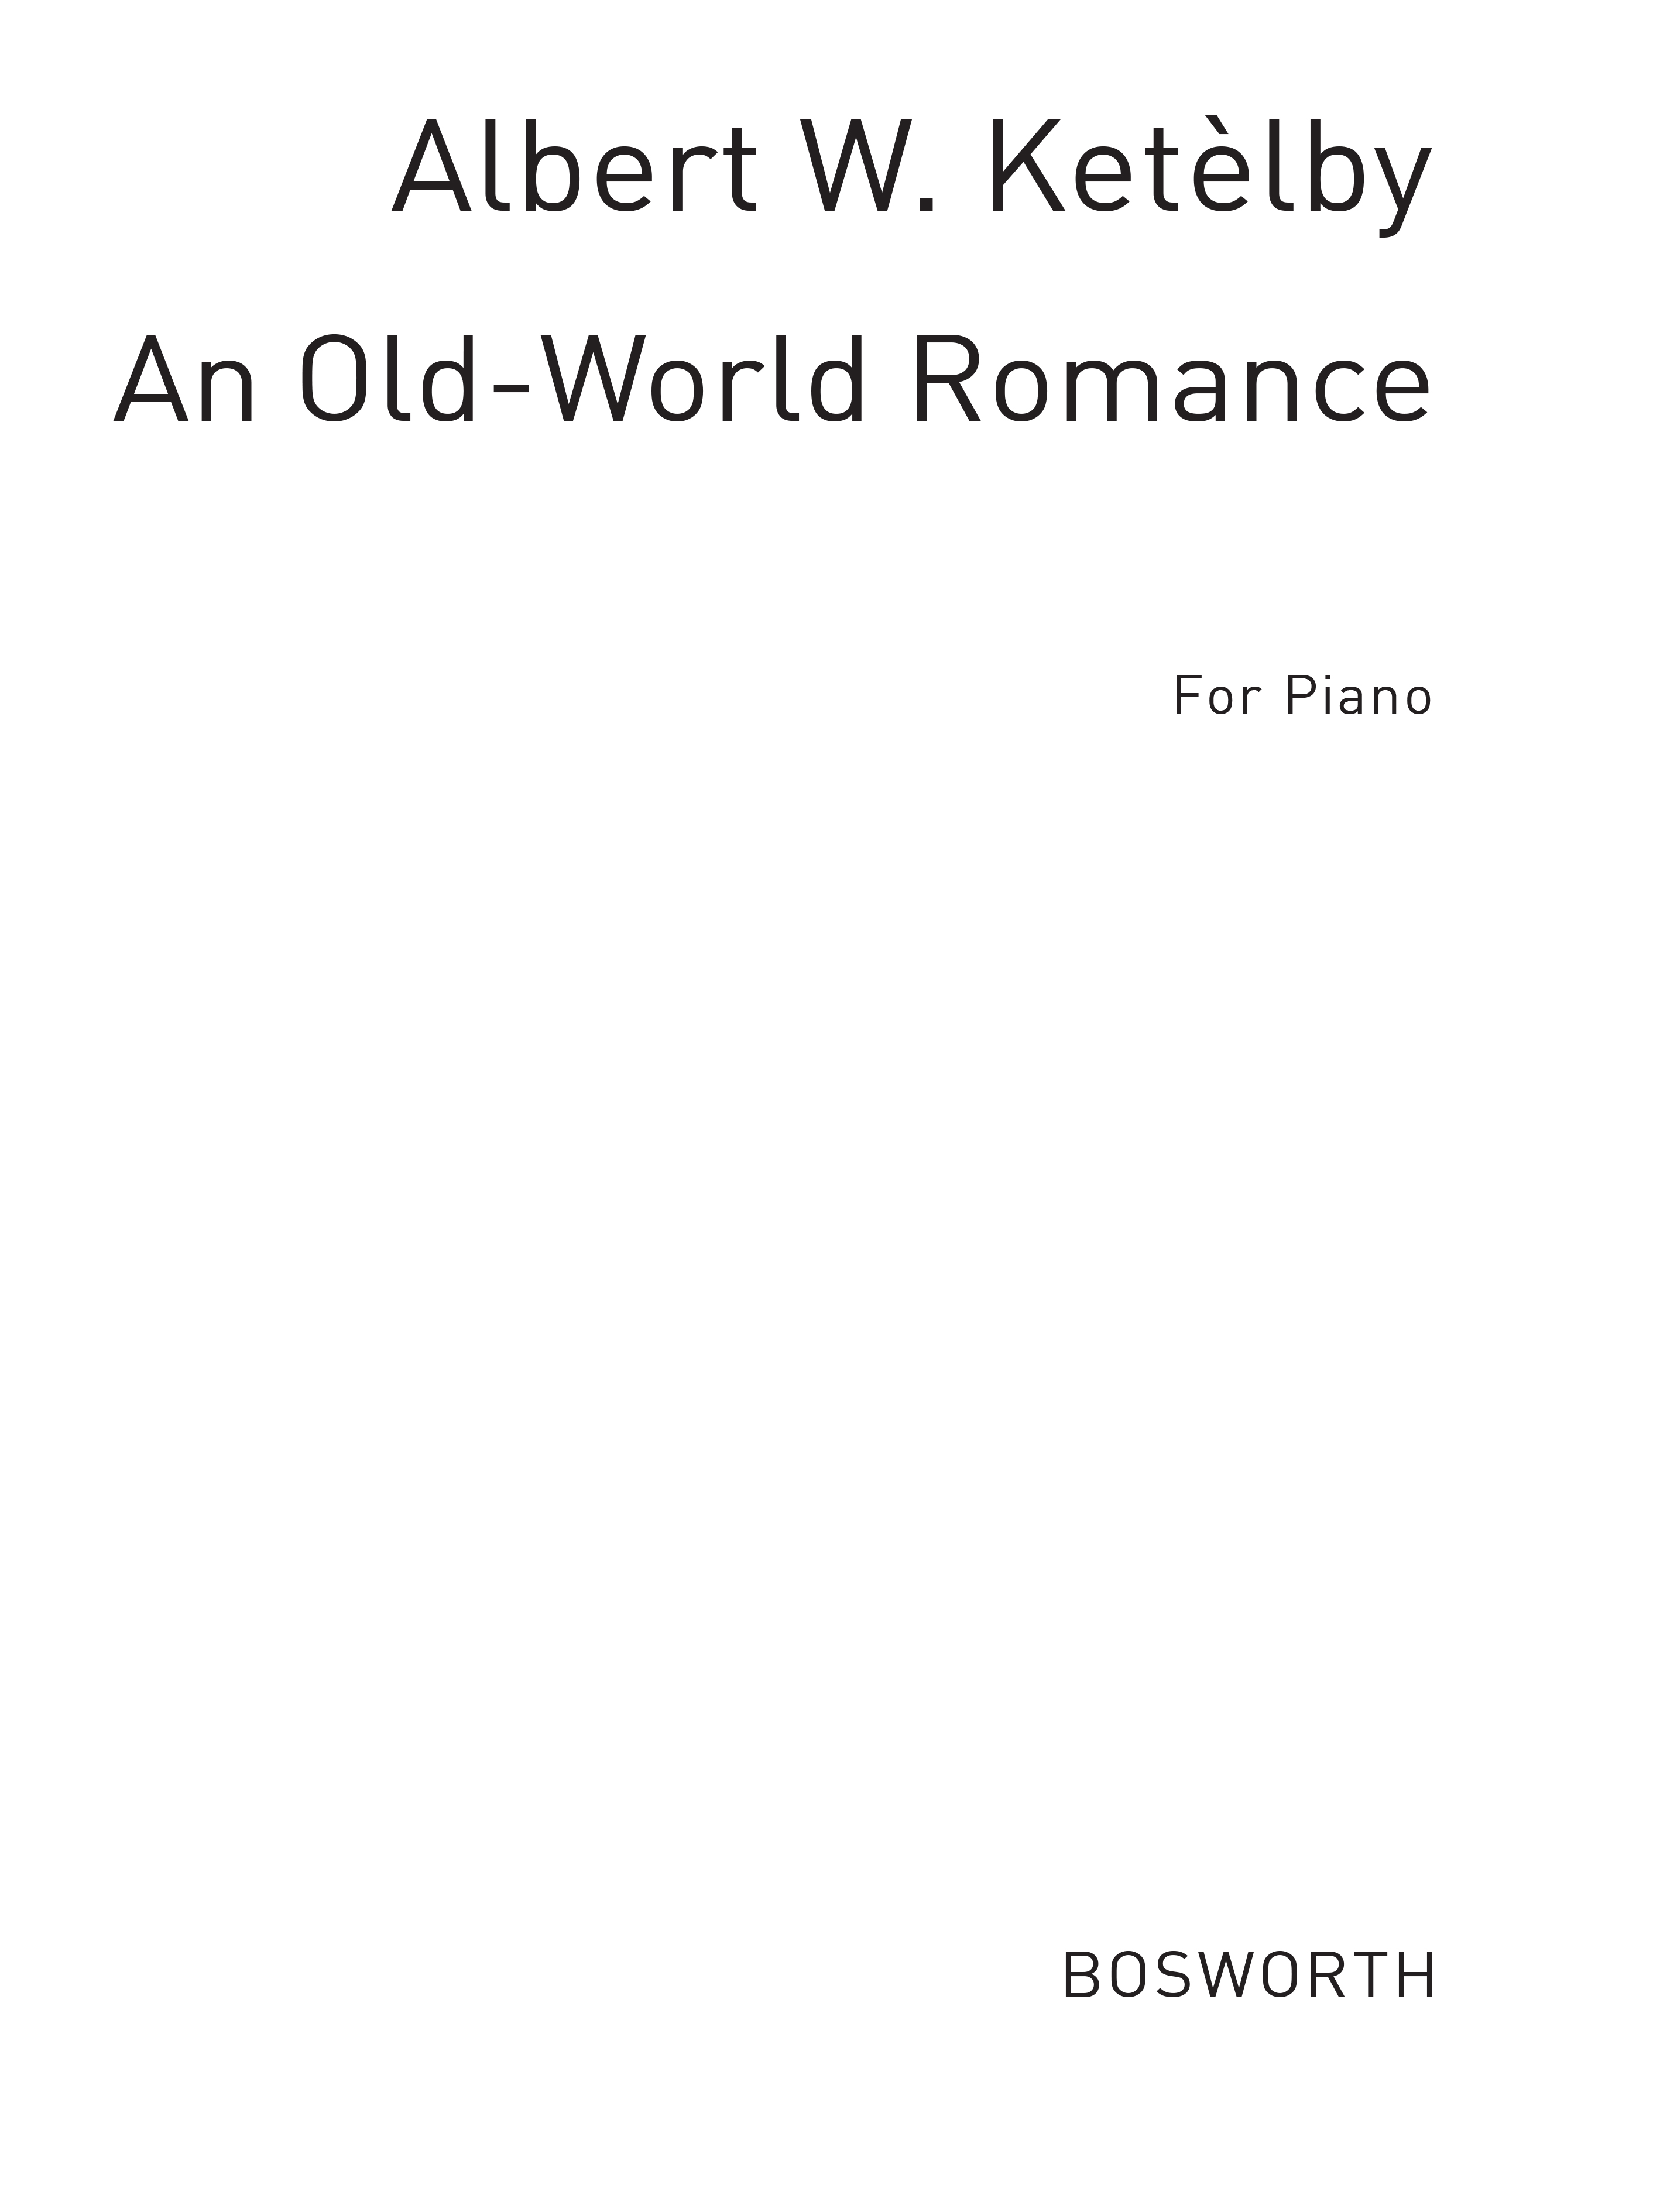 Albert Ketlbey: An Old World Romance: Piano: Instrumental Work